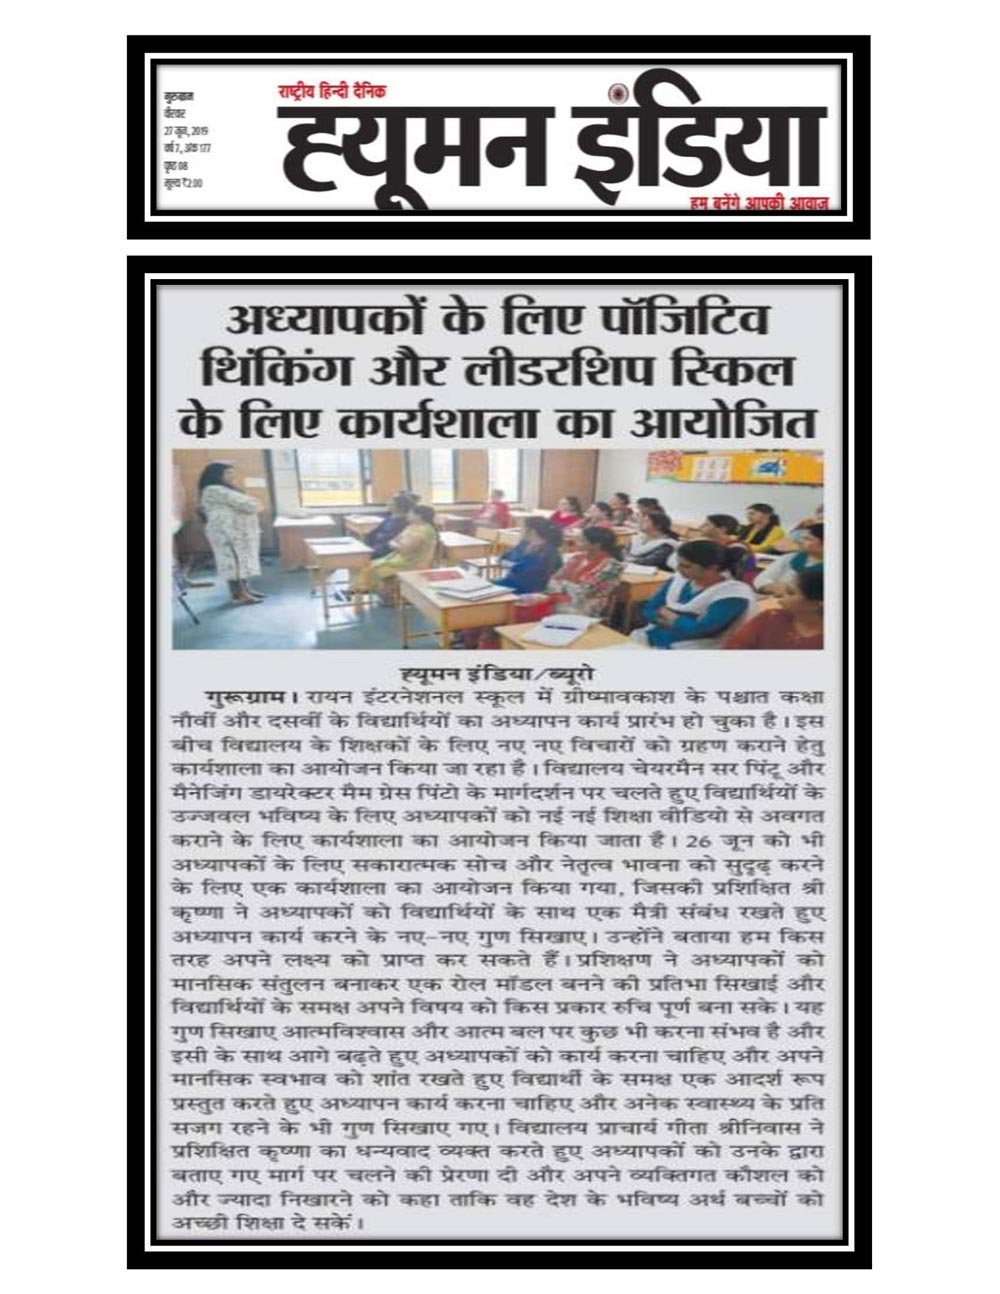 Ryan International School Gurgaon organises positive thinking and leadership workshops for teachers - Ryan International School, Sec 31 Gurgaon